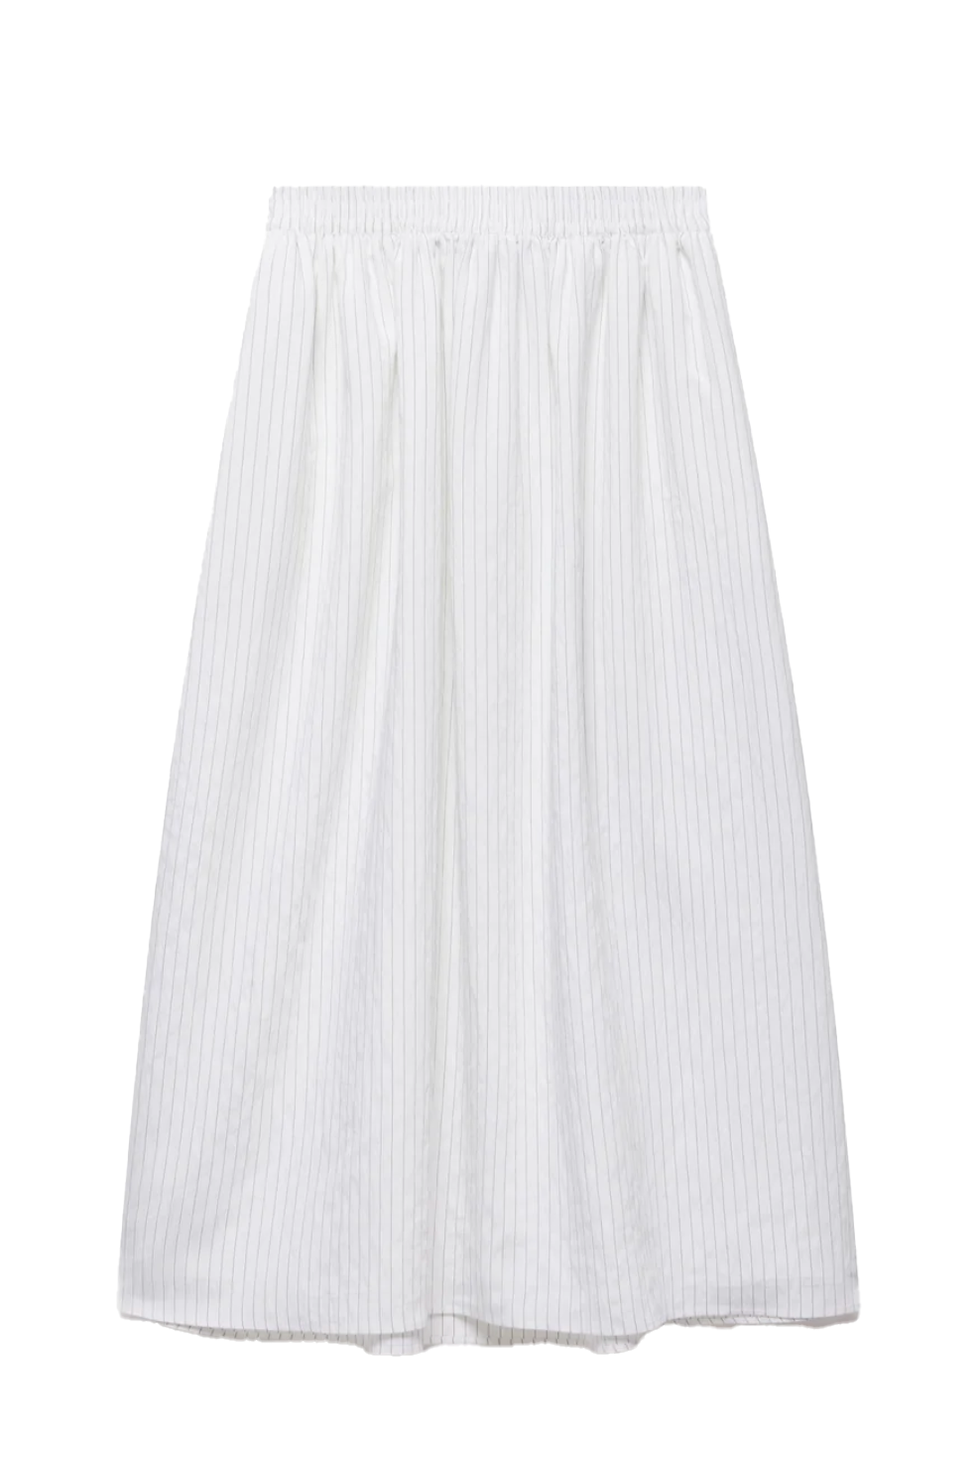 White Striped Maxi Skirt